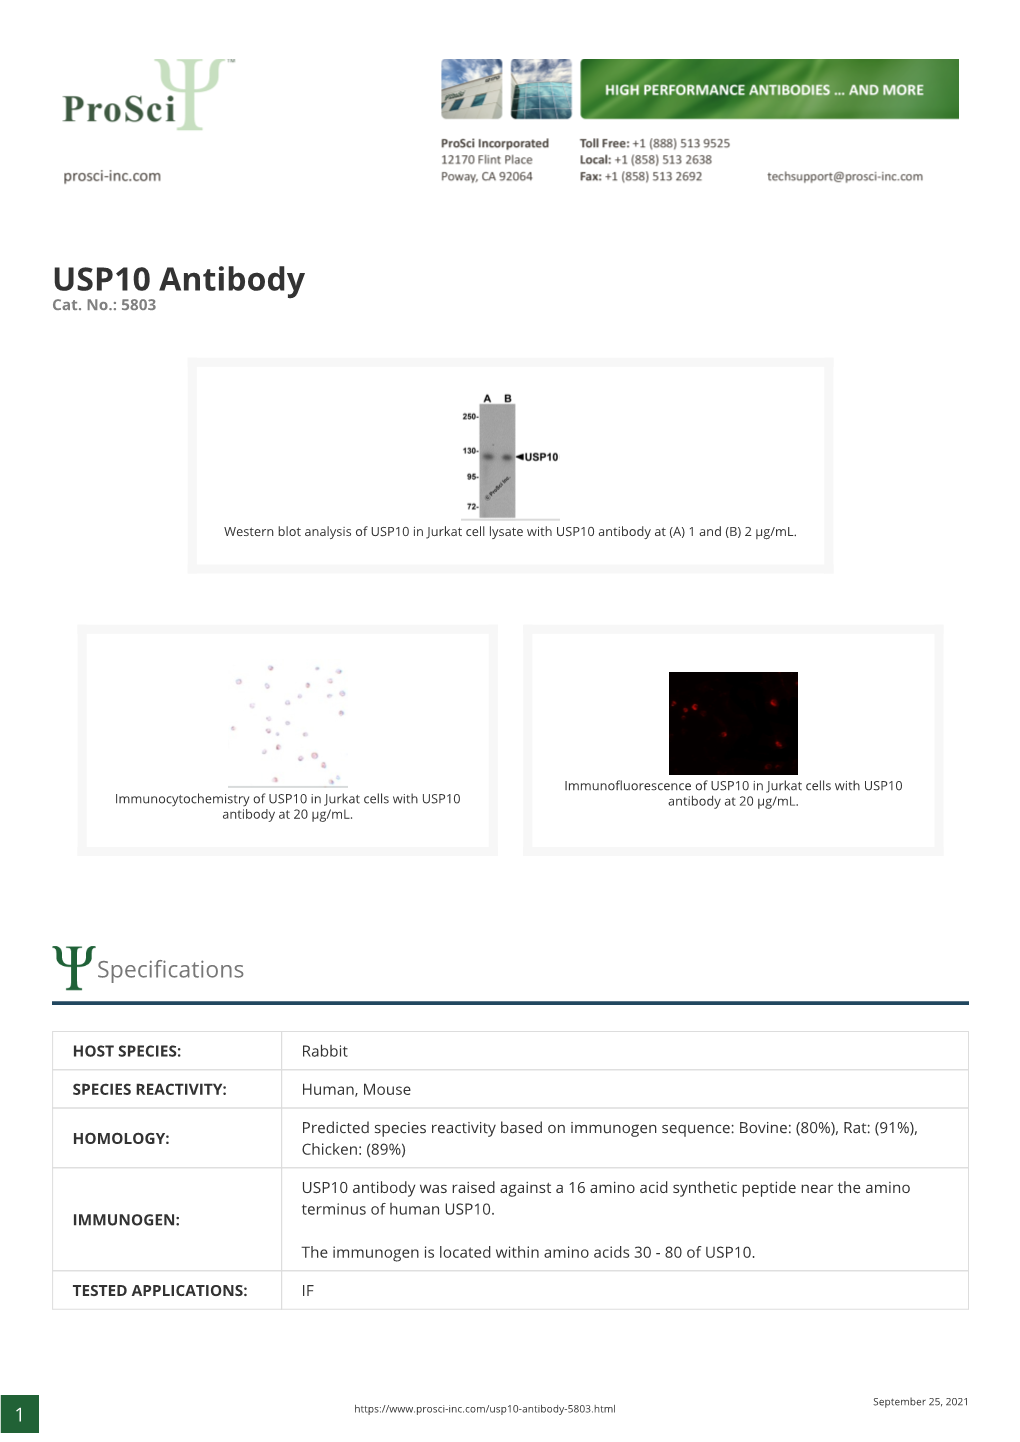 USP10 Antibody Cat